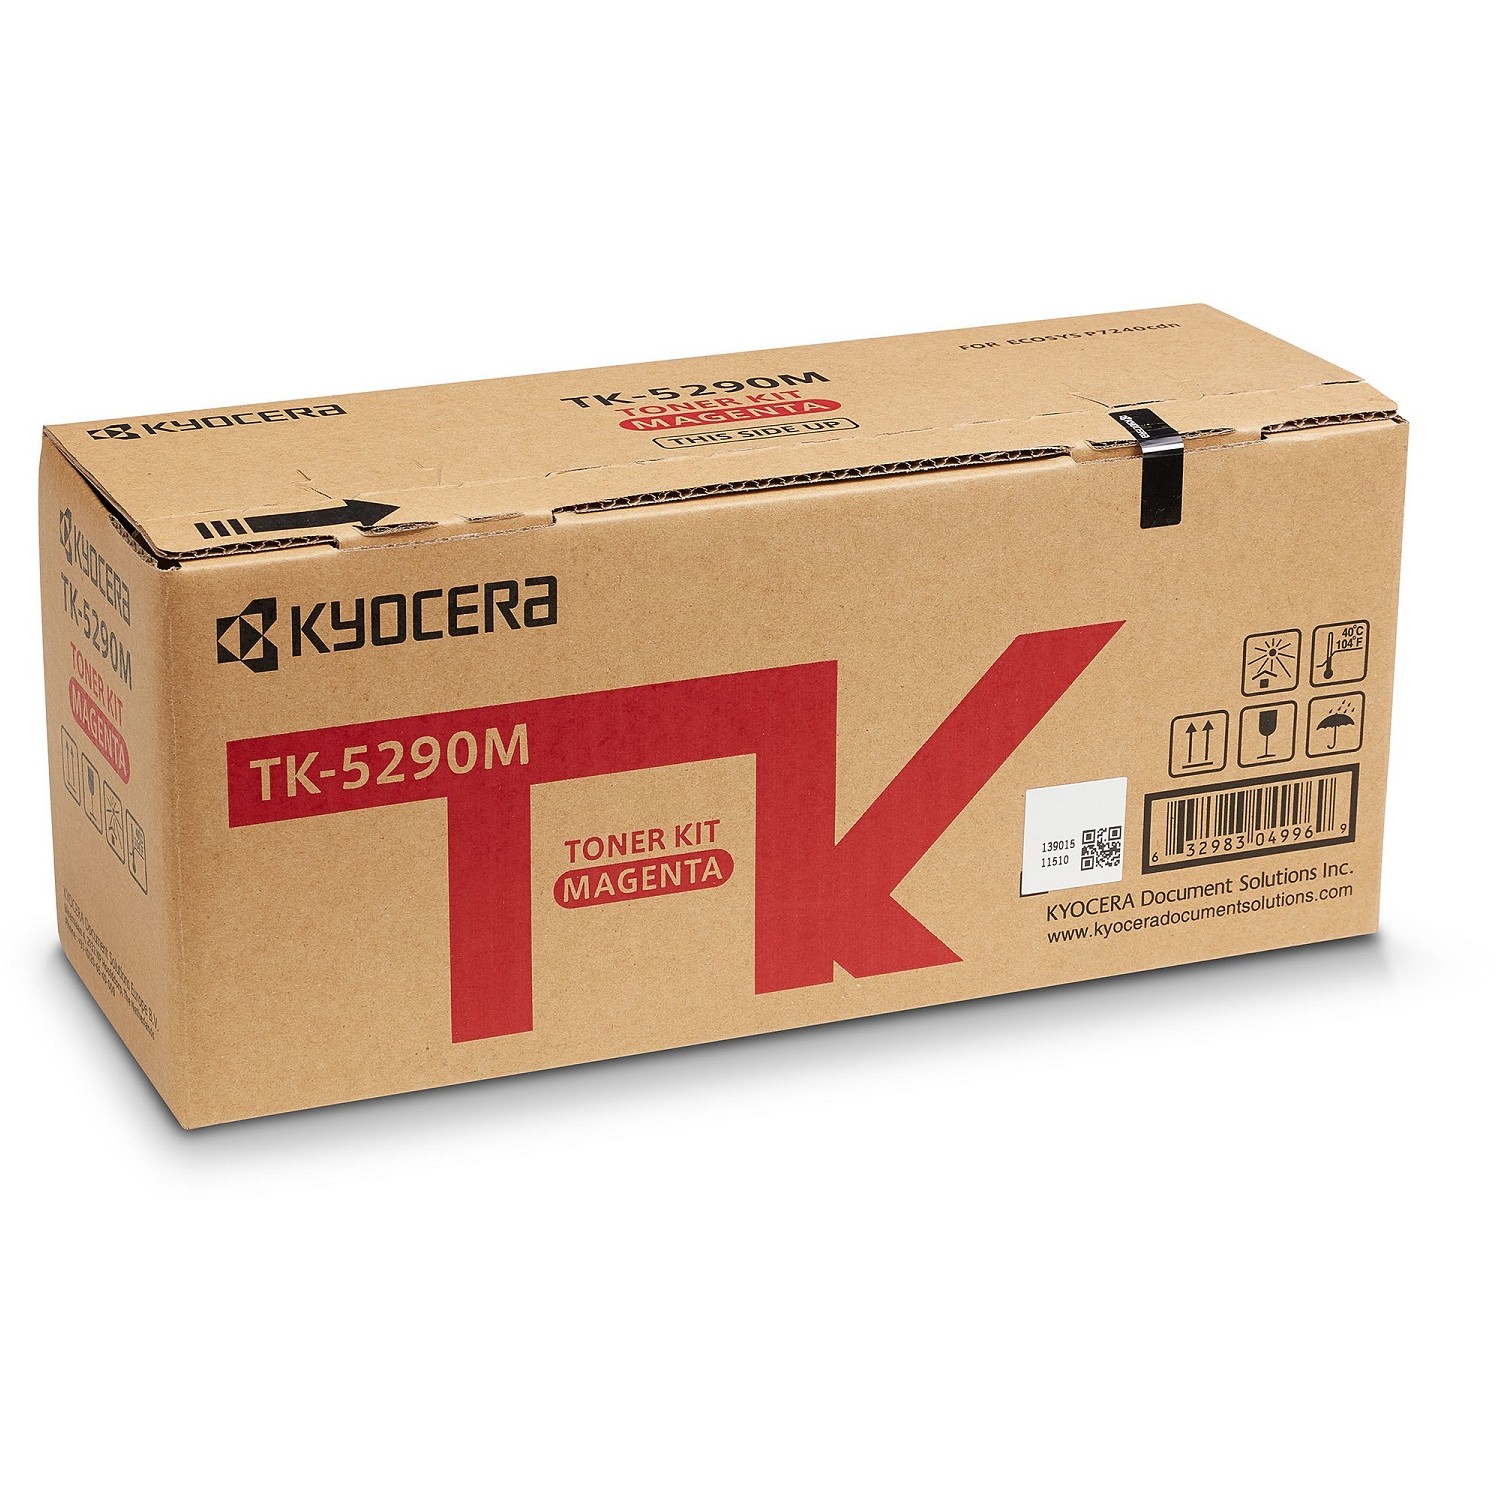 KYOCERA TK-5290M toner cartridge